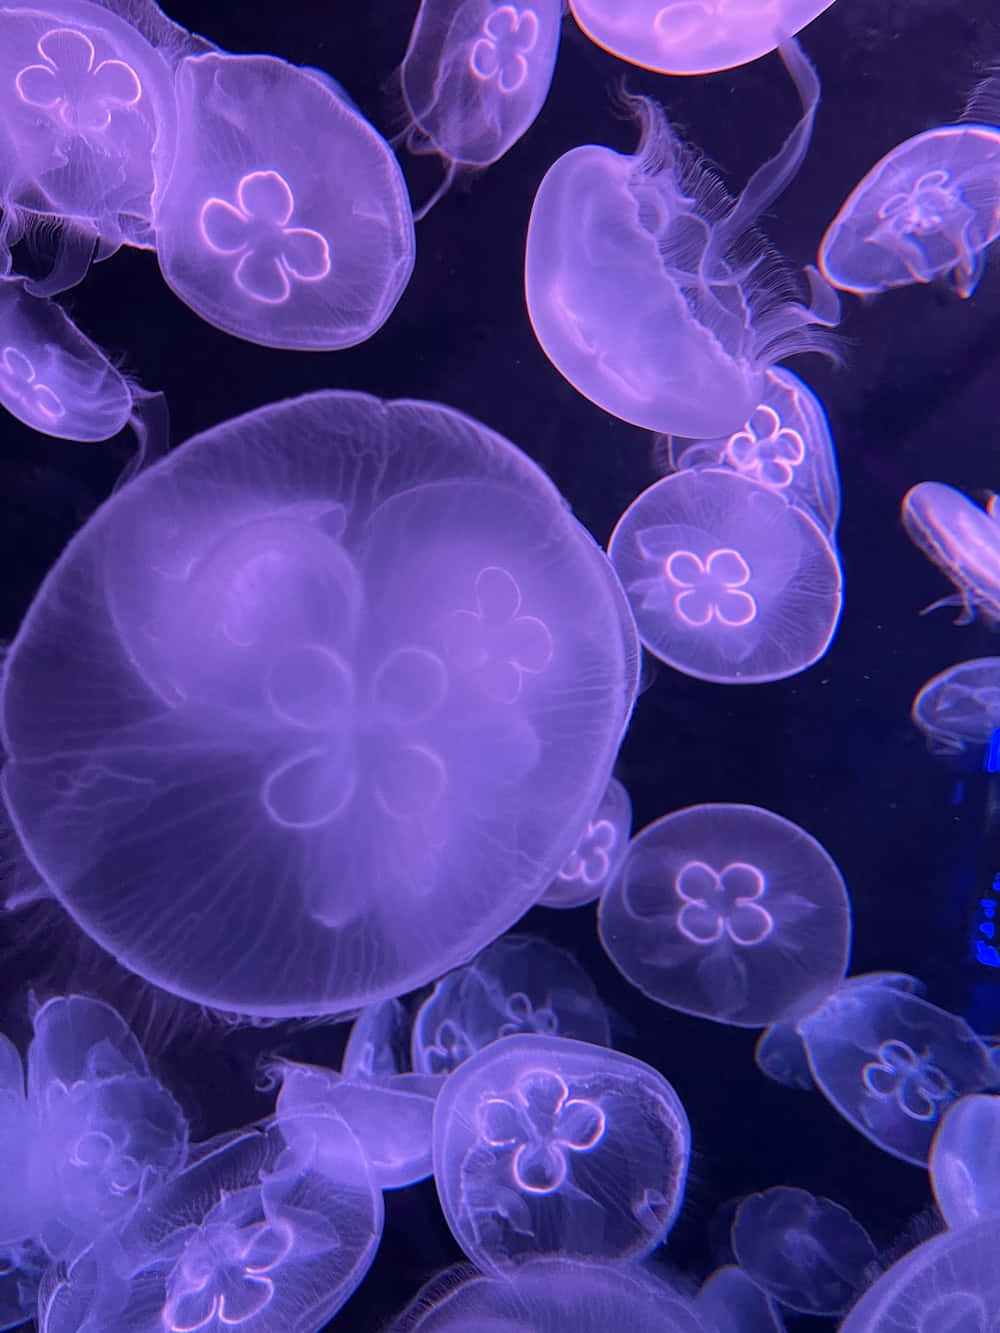 Moon Jellyfish Underwater Dance Wallpaper